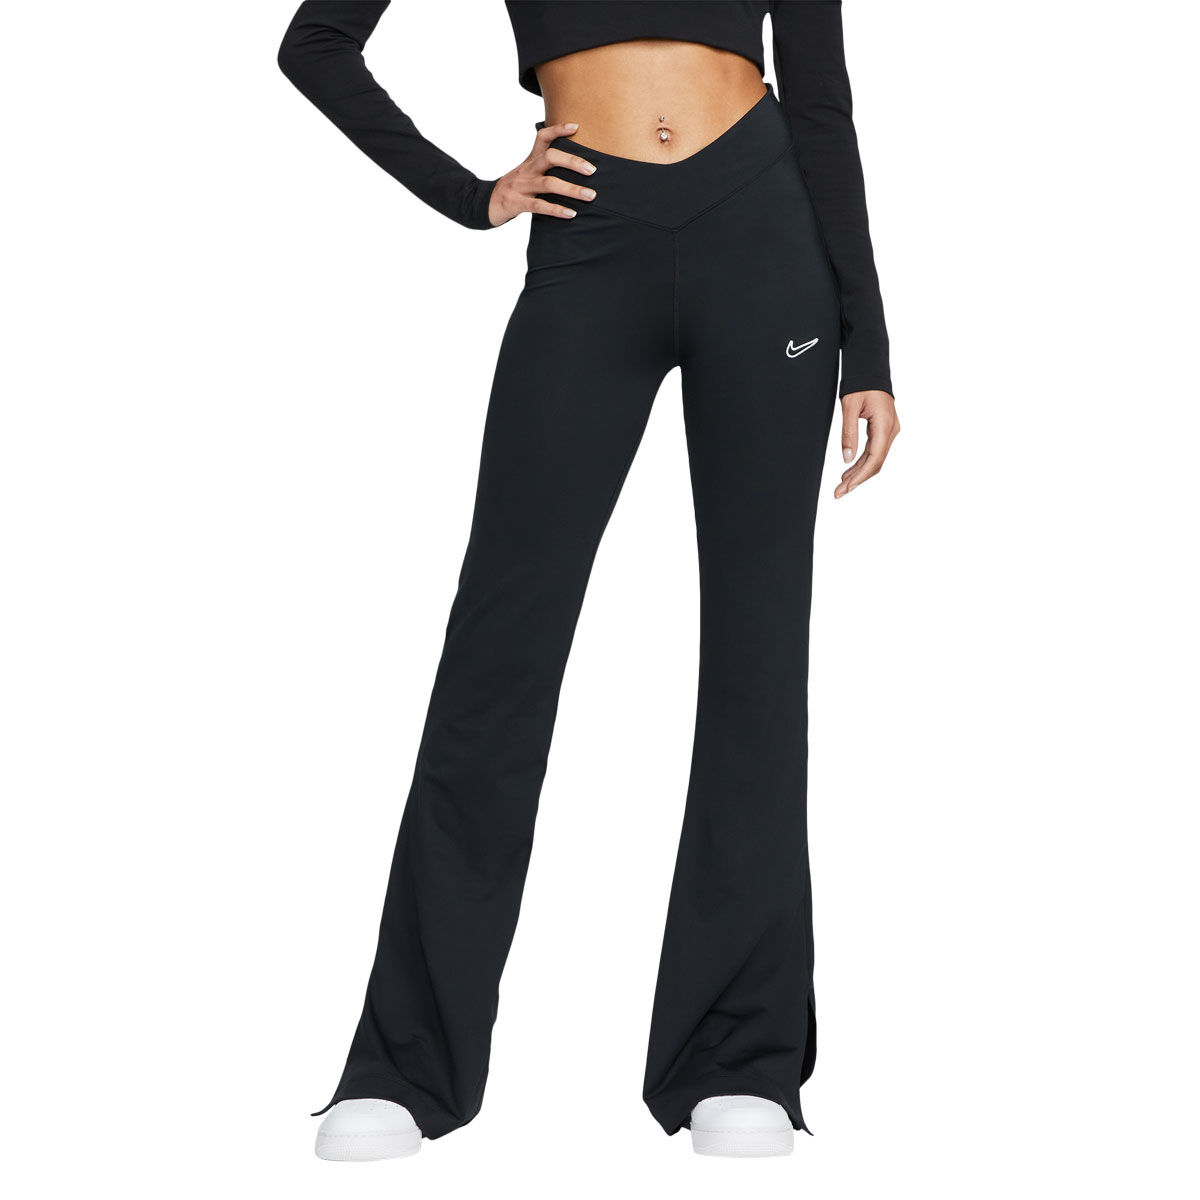 Nike black leggings flare pants wide leg tights Size XS - $18 (72